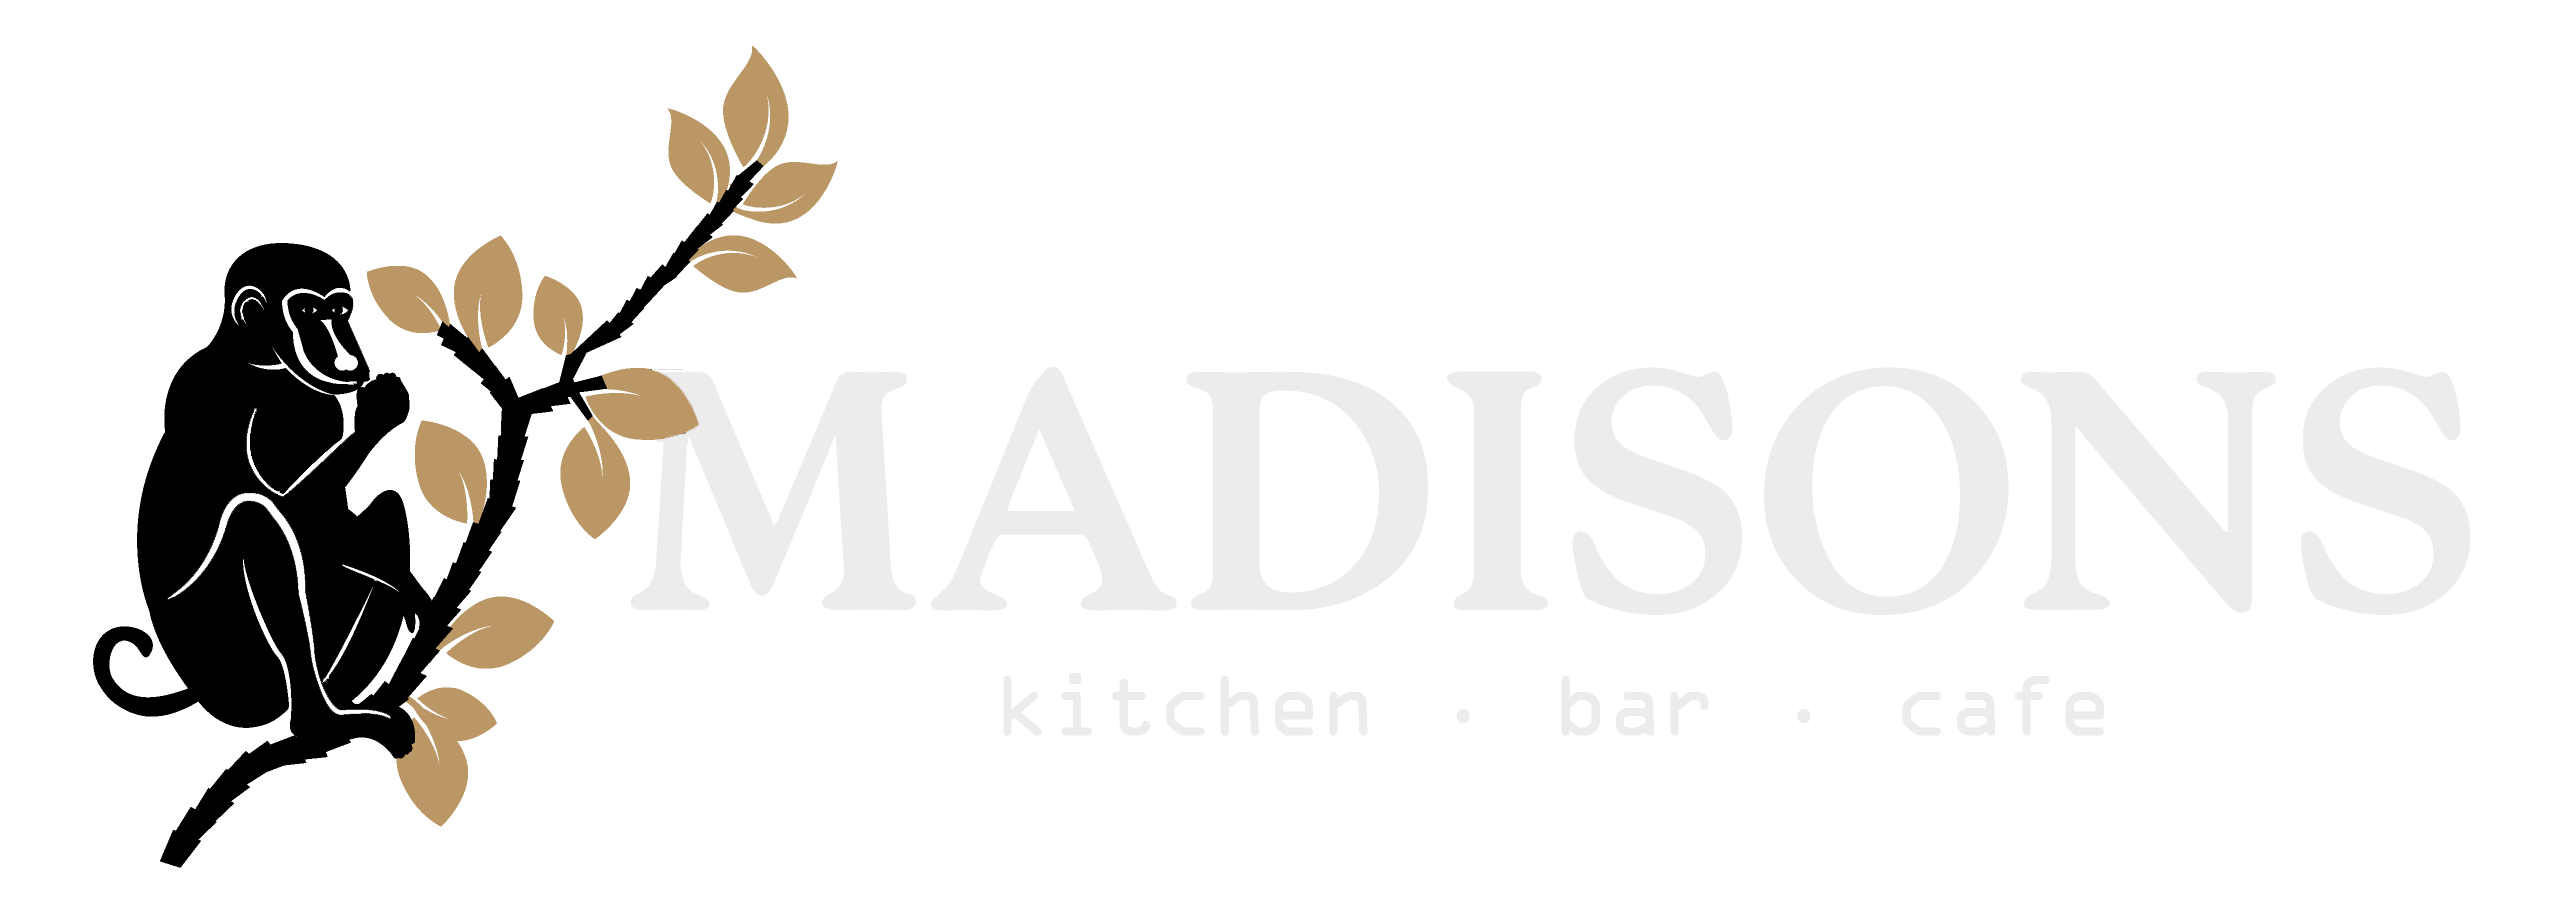 Madisons Restaurant logo